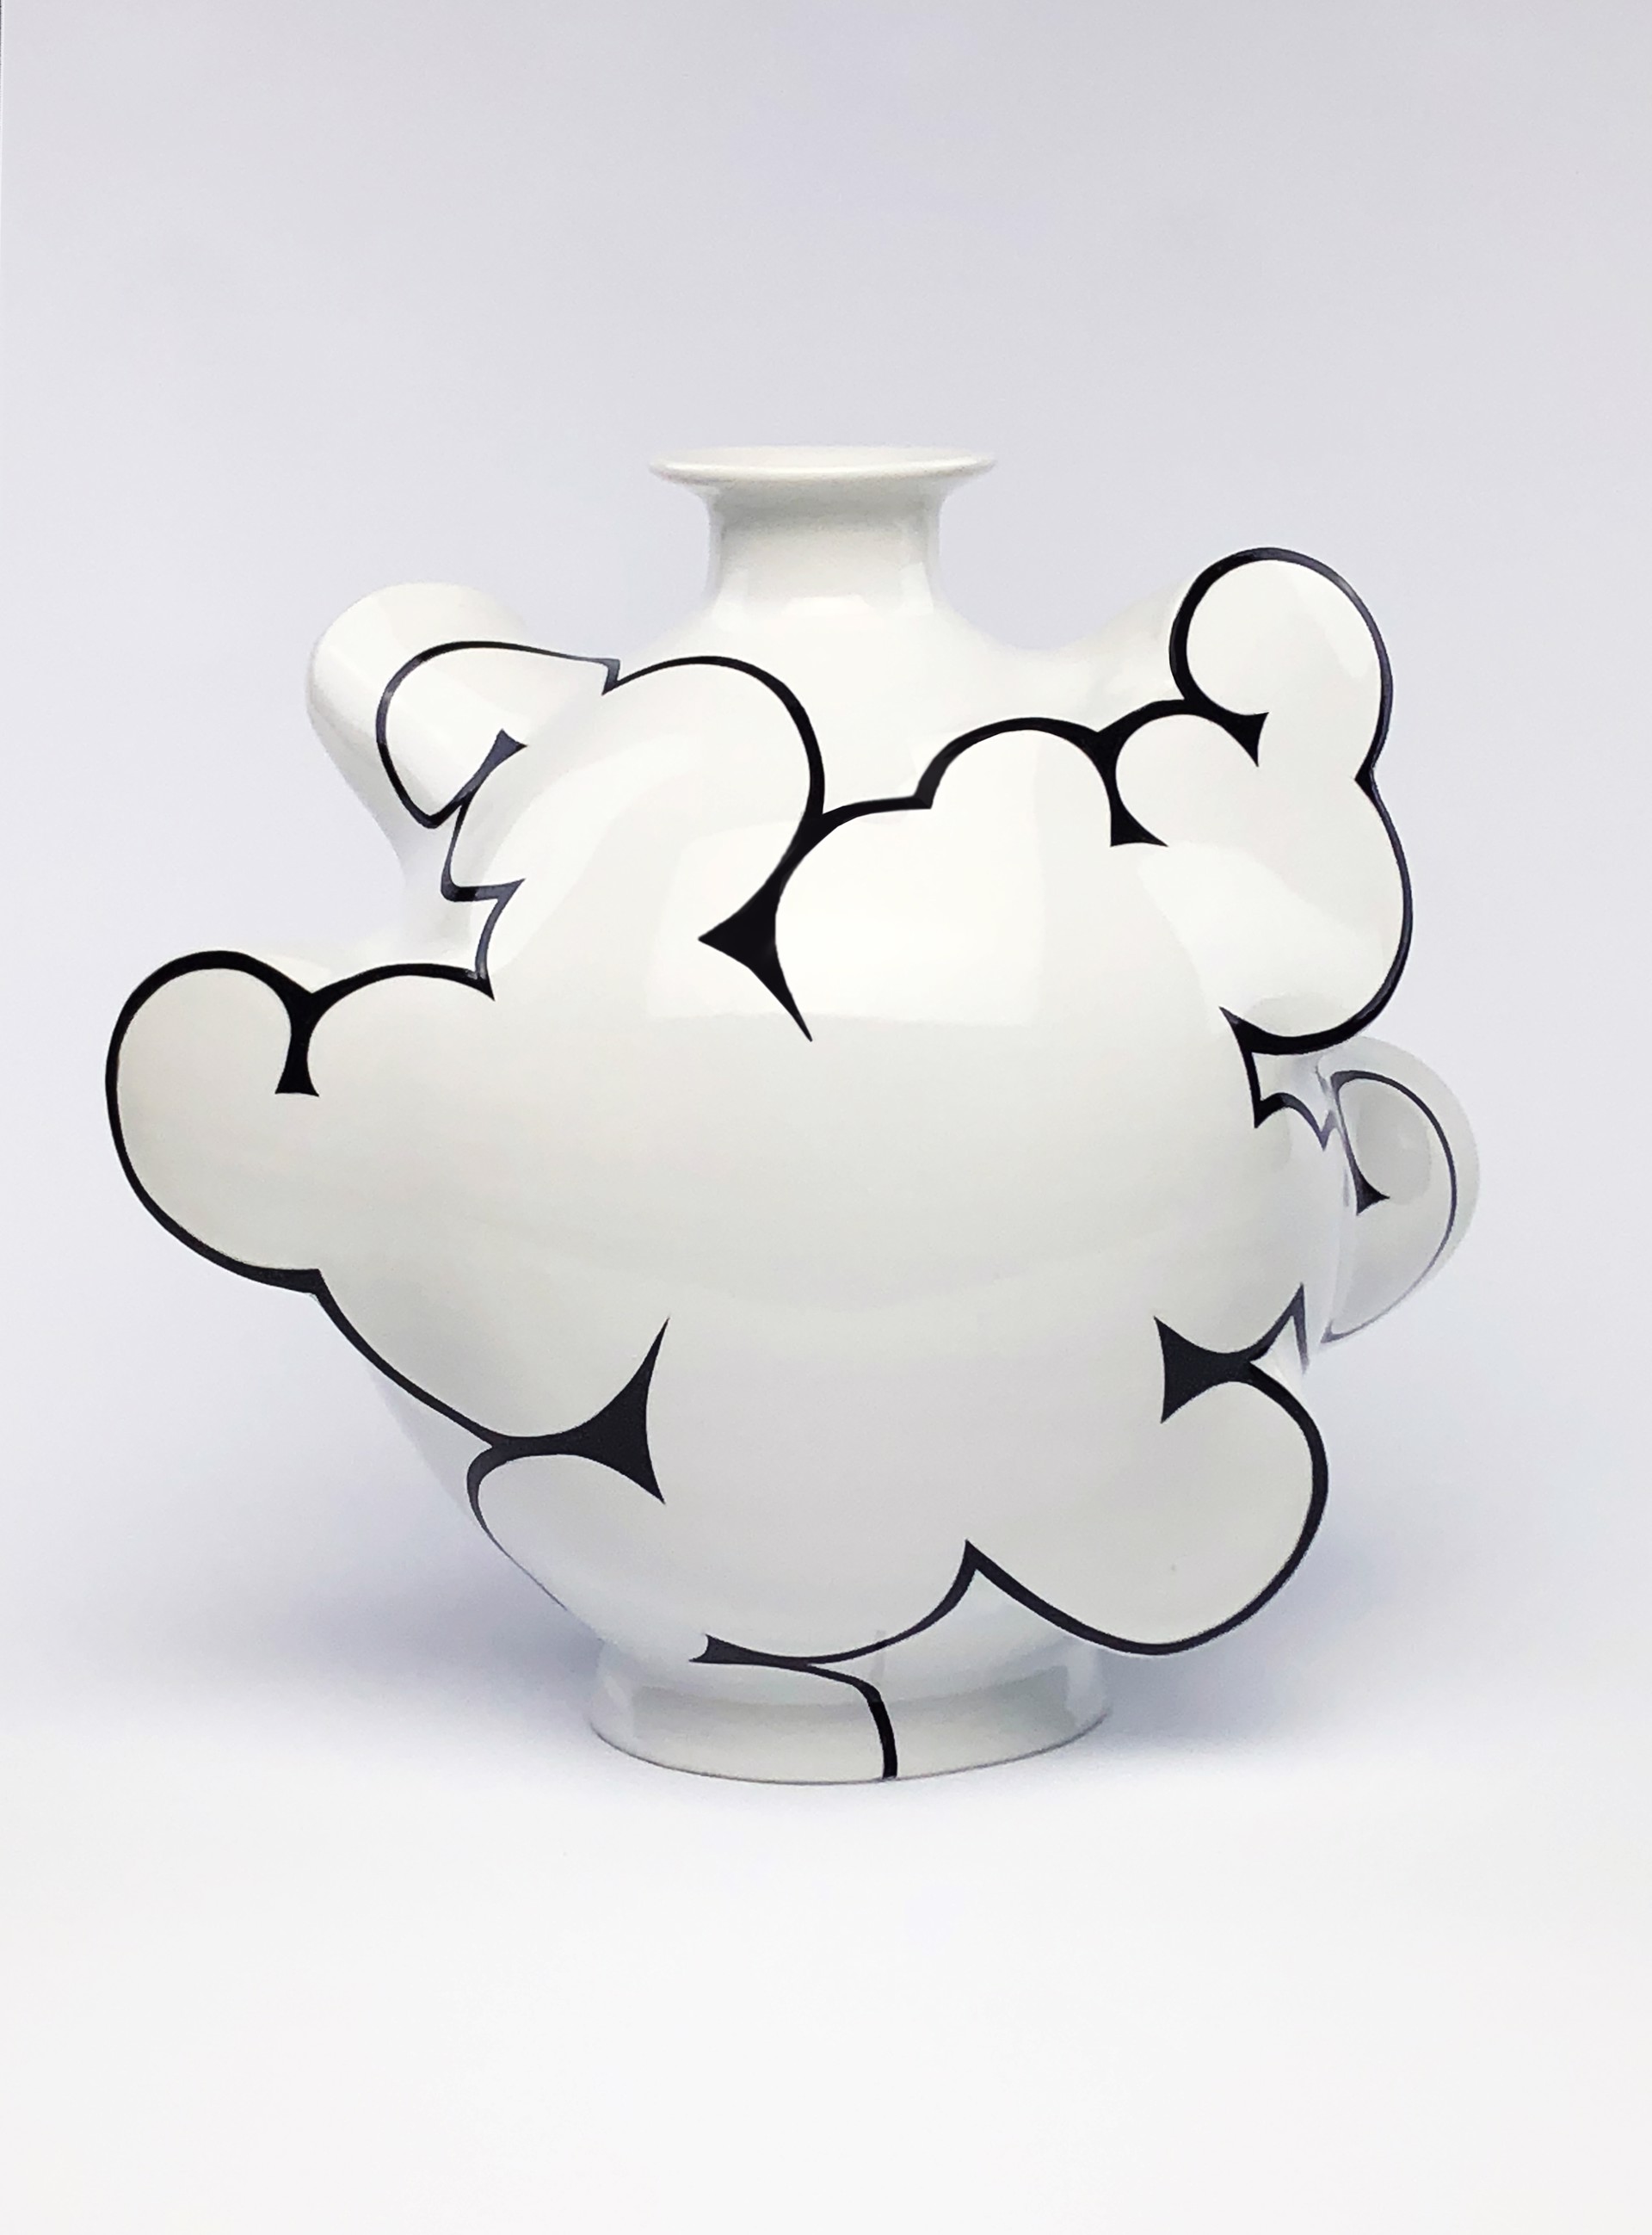 Cloud Flask by Sam Chung